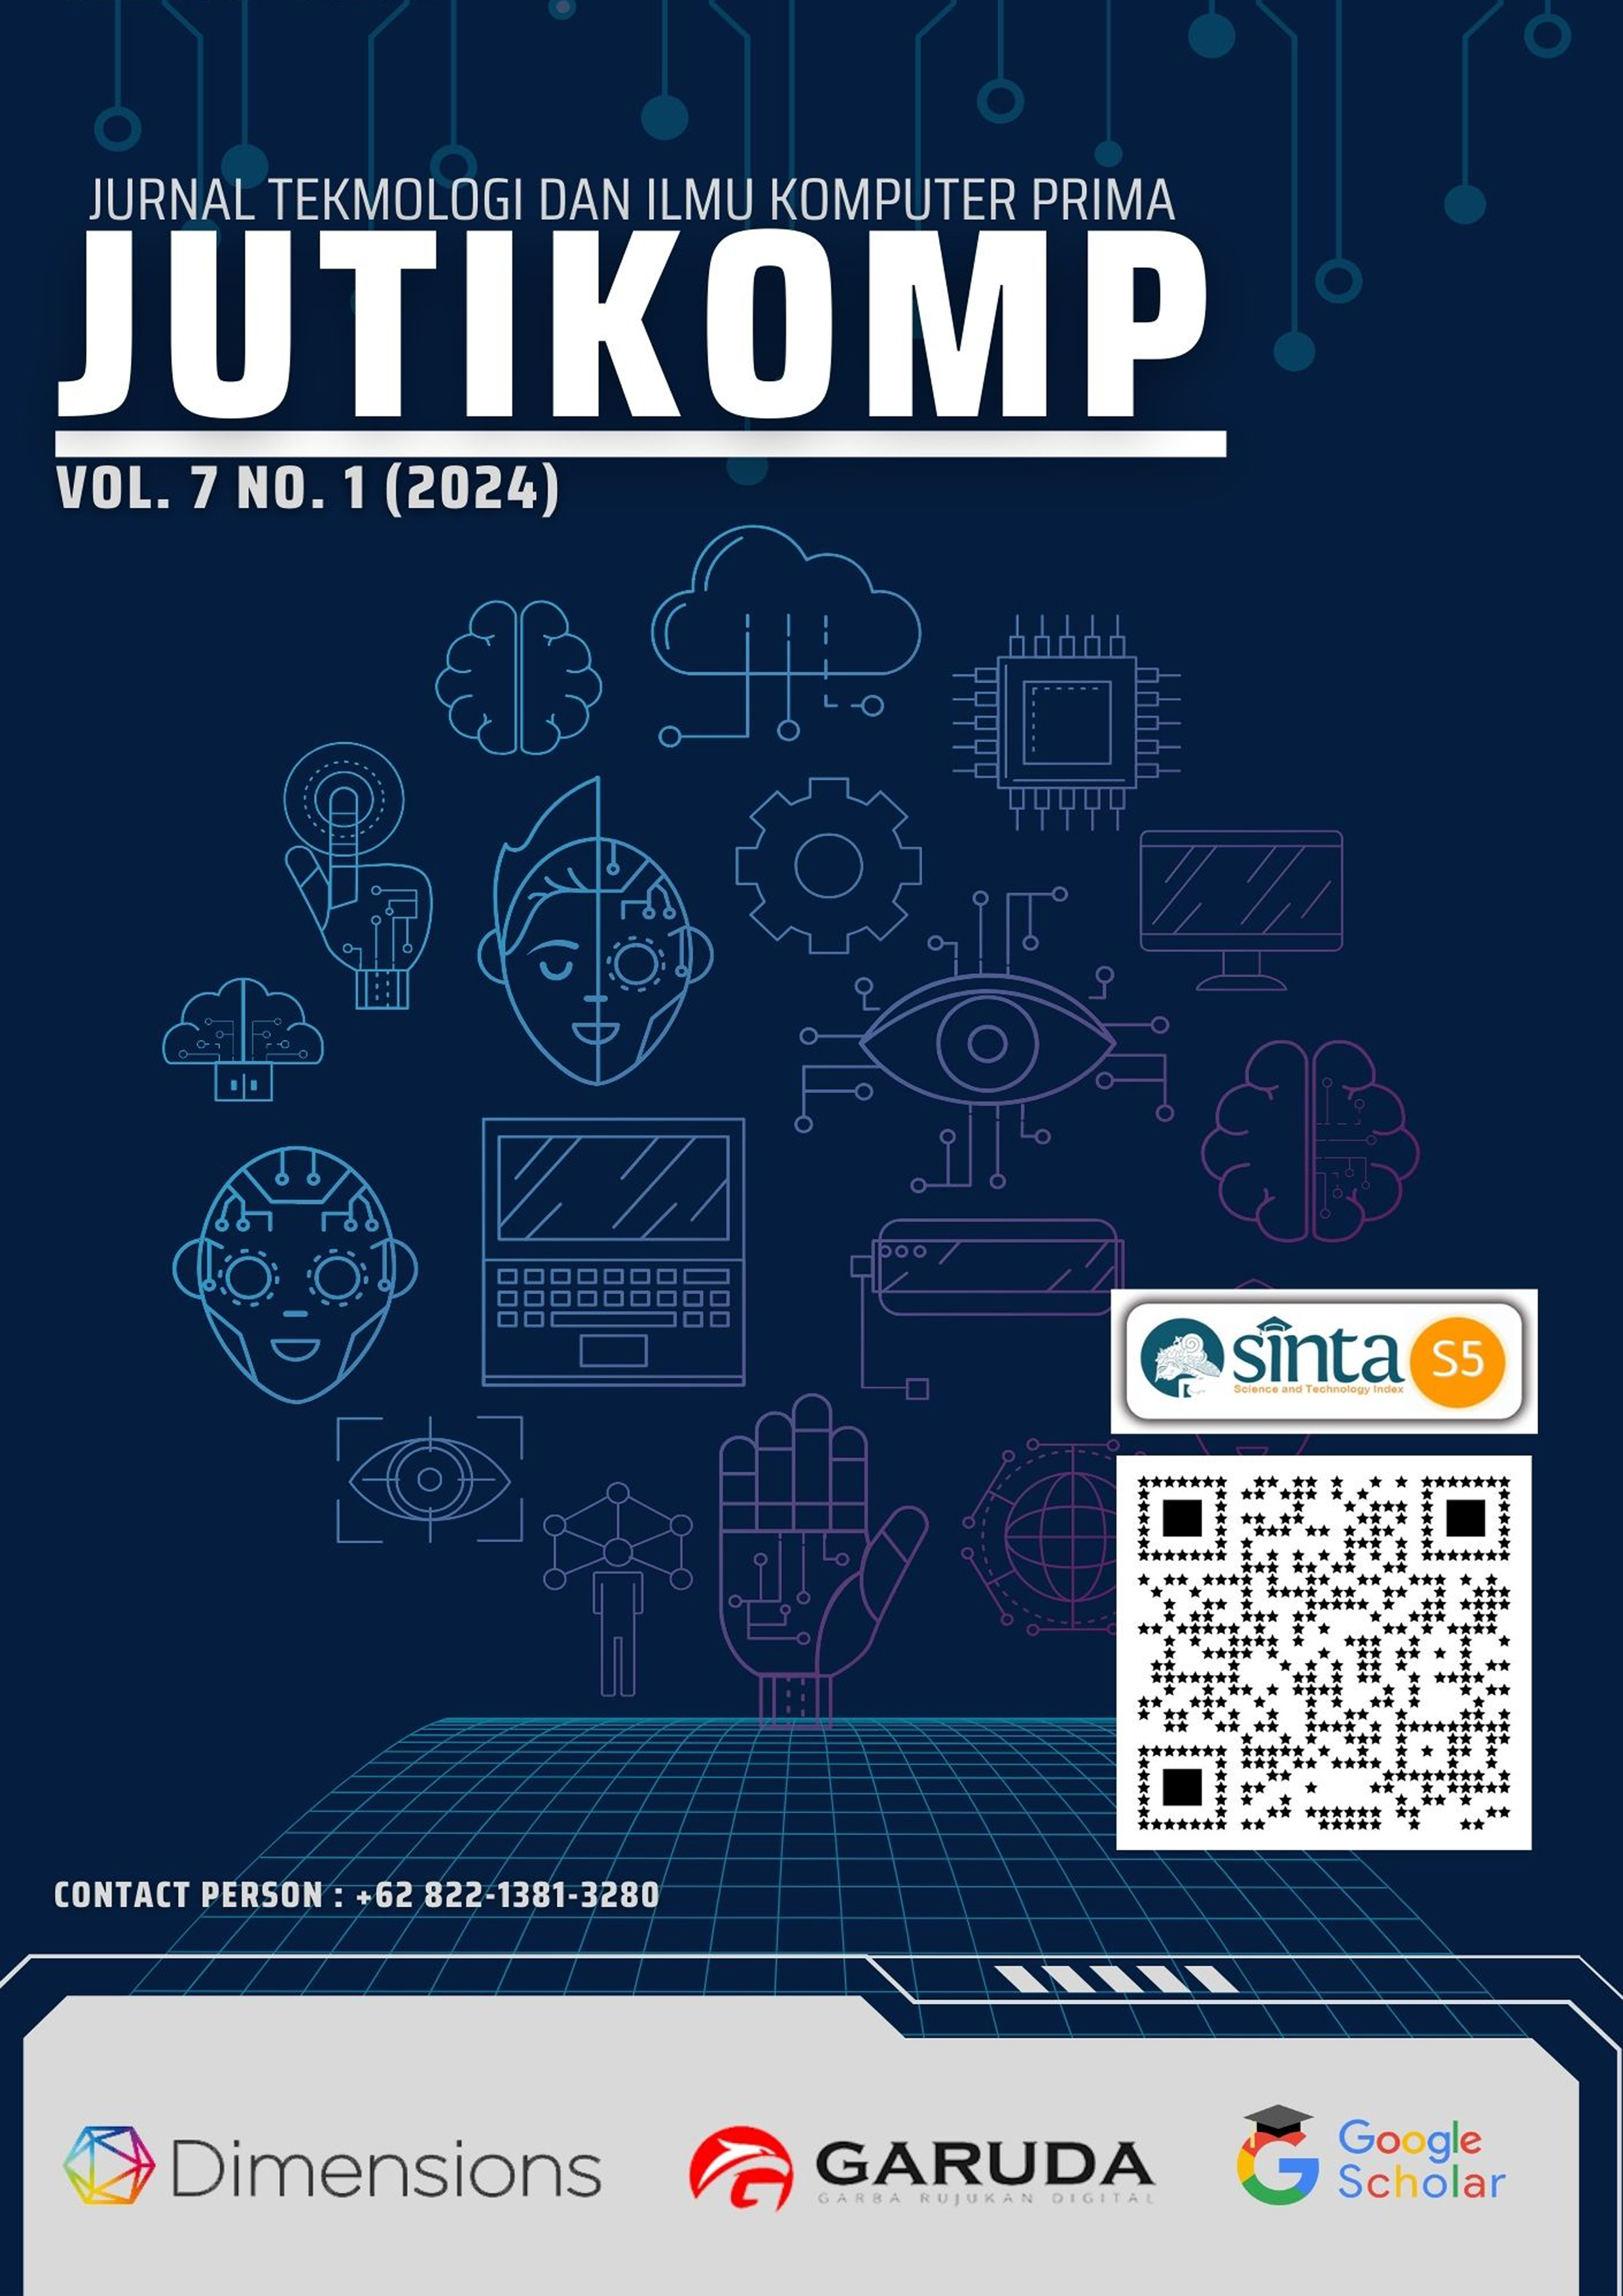 					View Vol. 7 No. 1 (2024): Jurnal Teknologi dan Ilmu Komputer Prima (JUTIKOMP)
				